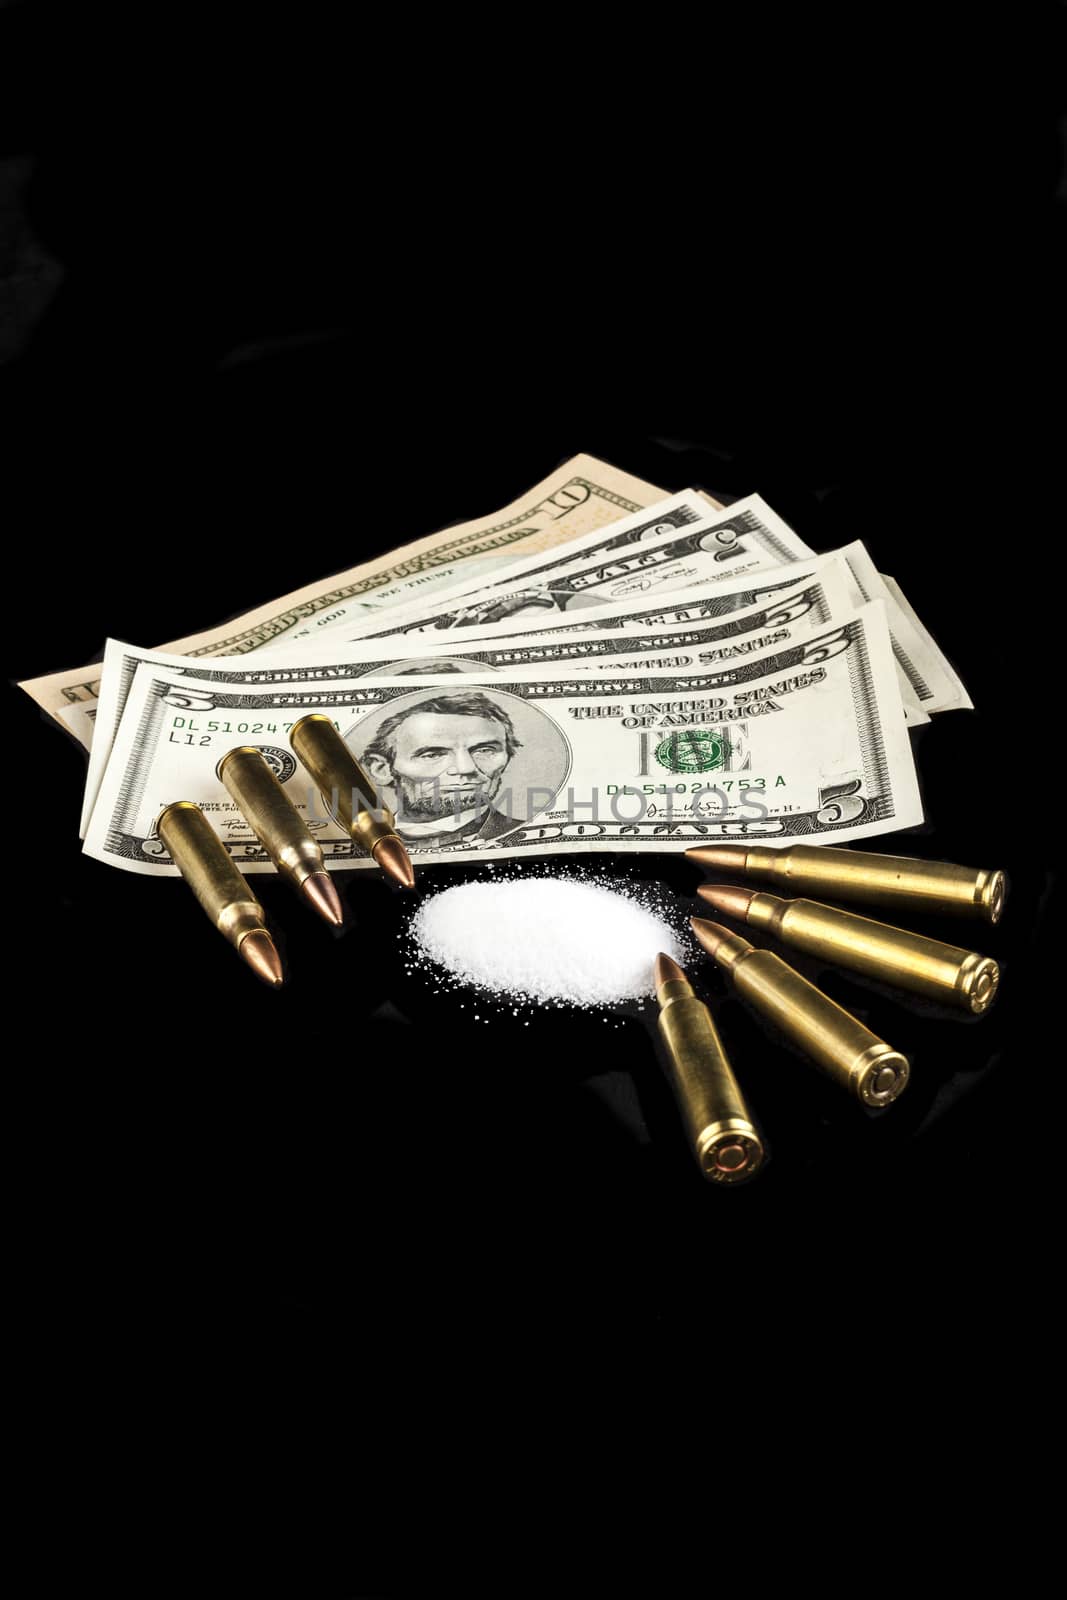 bullets on dollar banknotes with white drug powder on black background